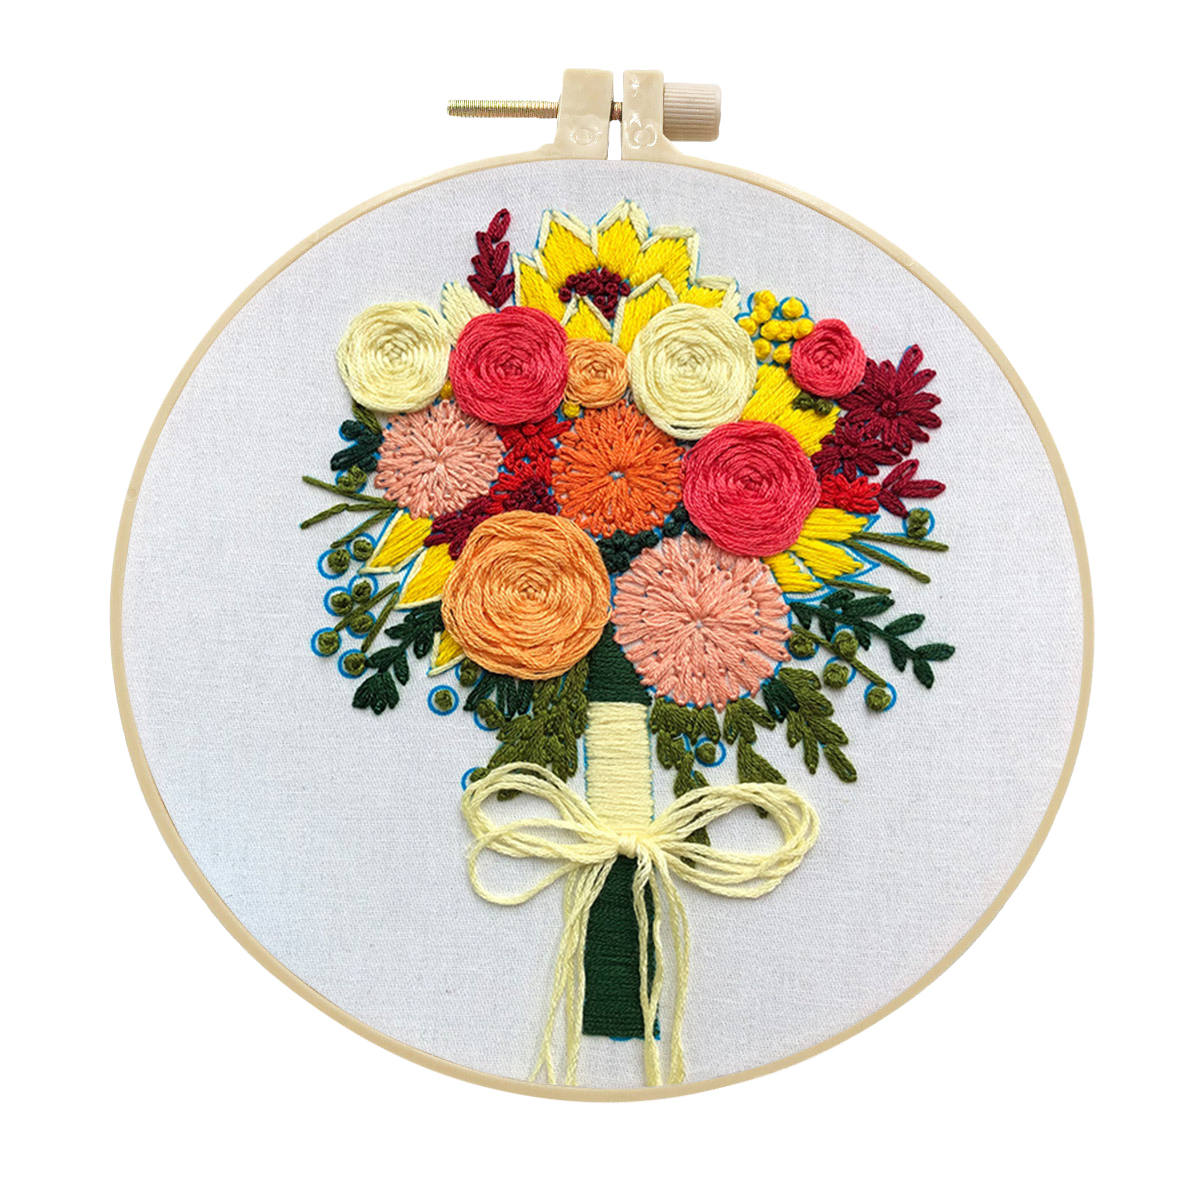 DIY Handmade Embroidery Kit Craft Cross Stitch Kits Beginner - Love Bouquet Pattern